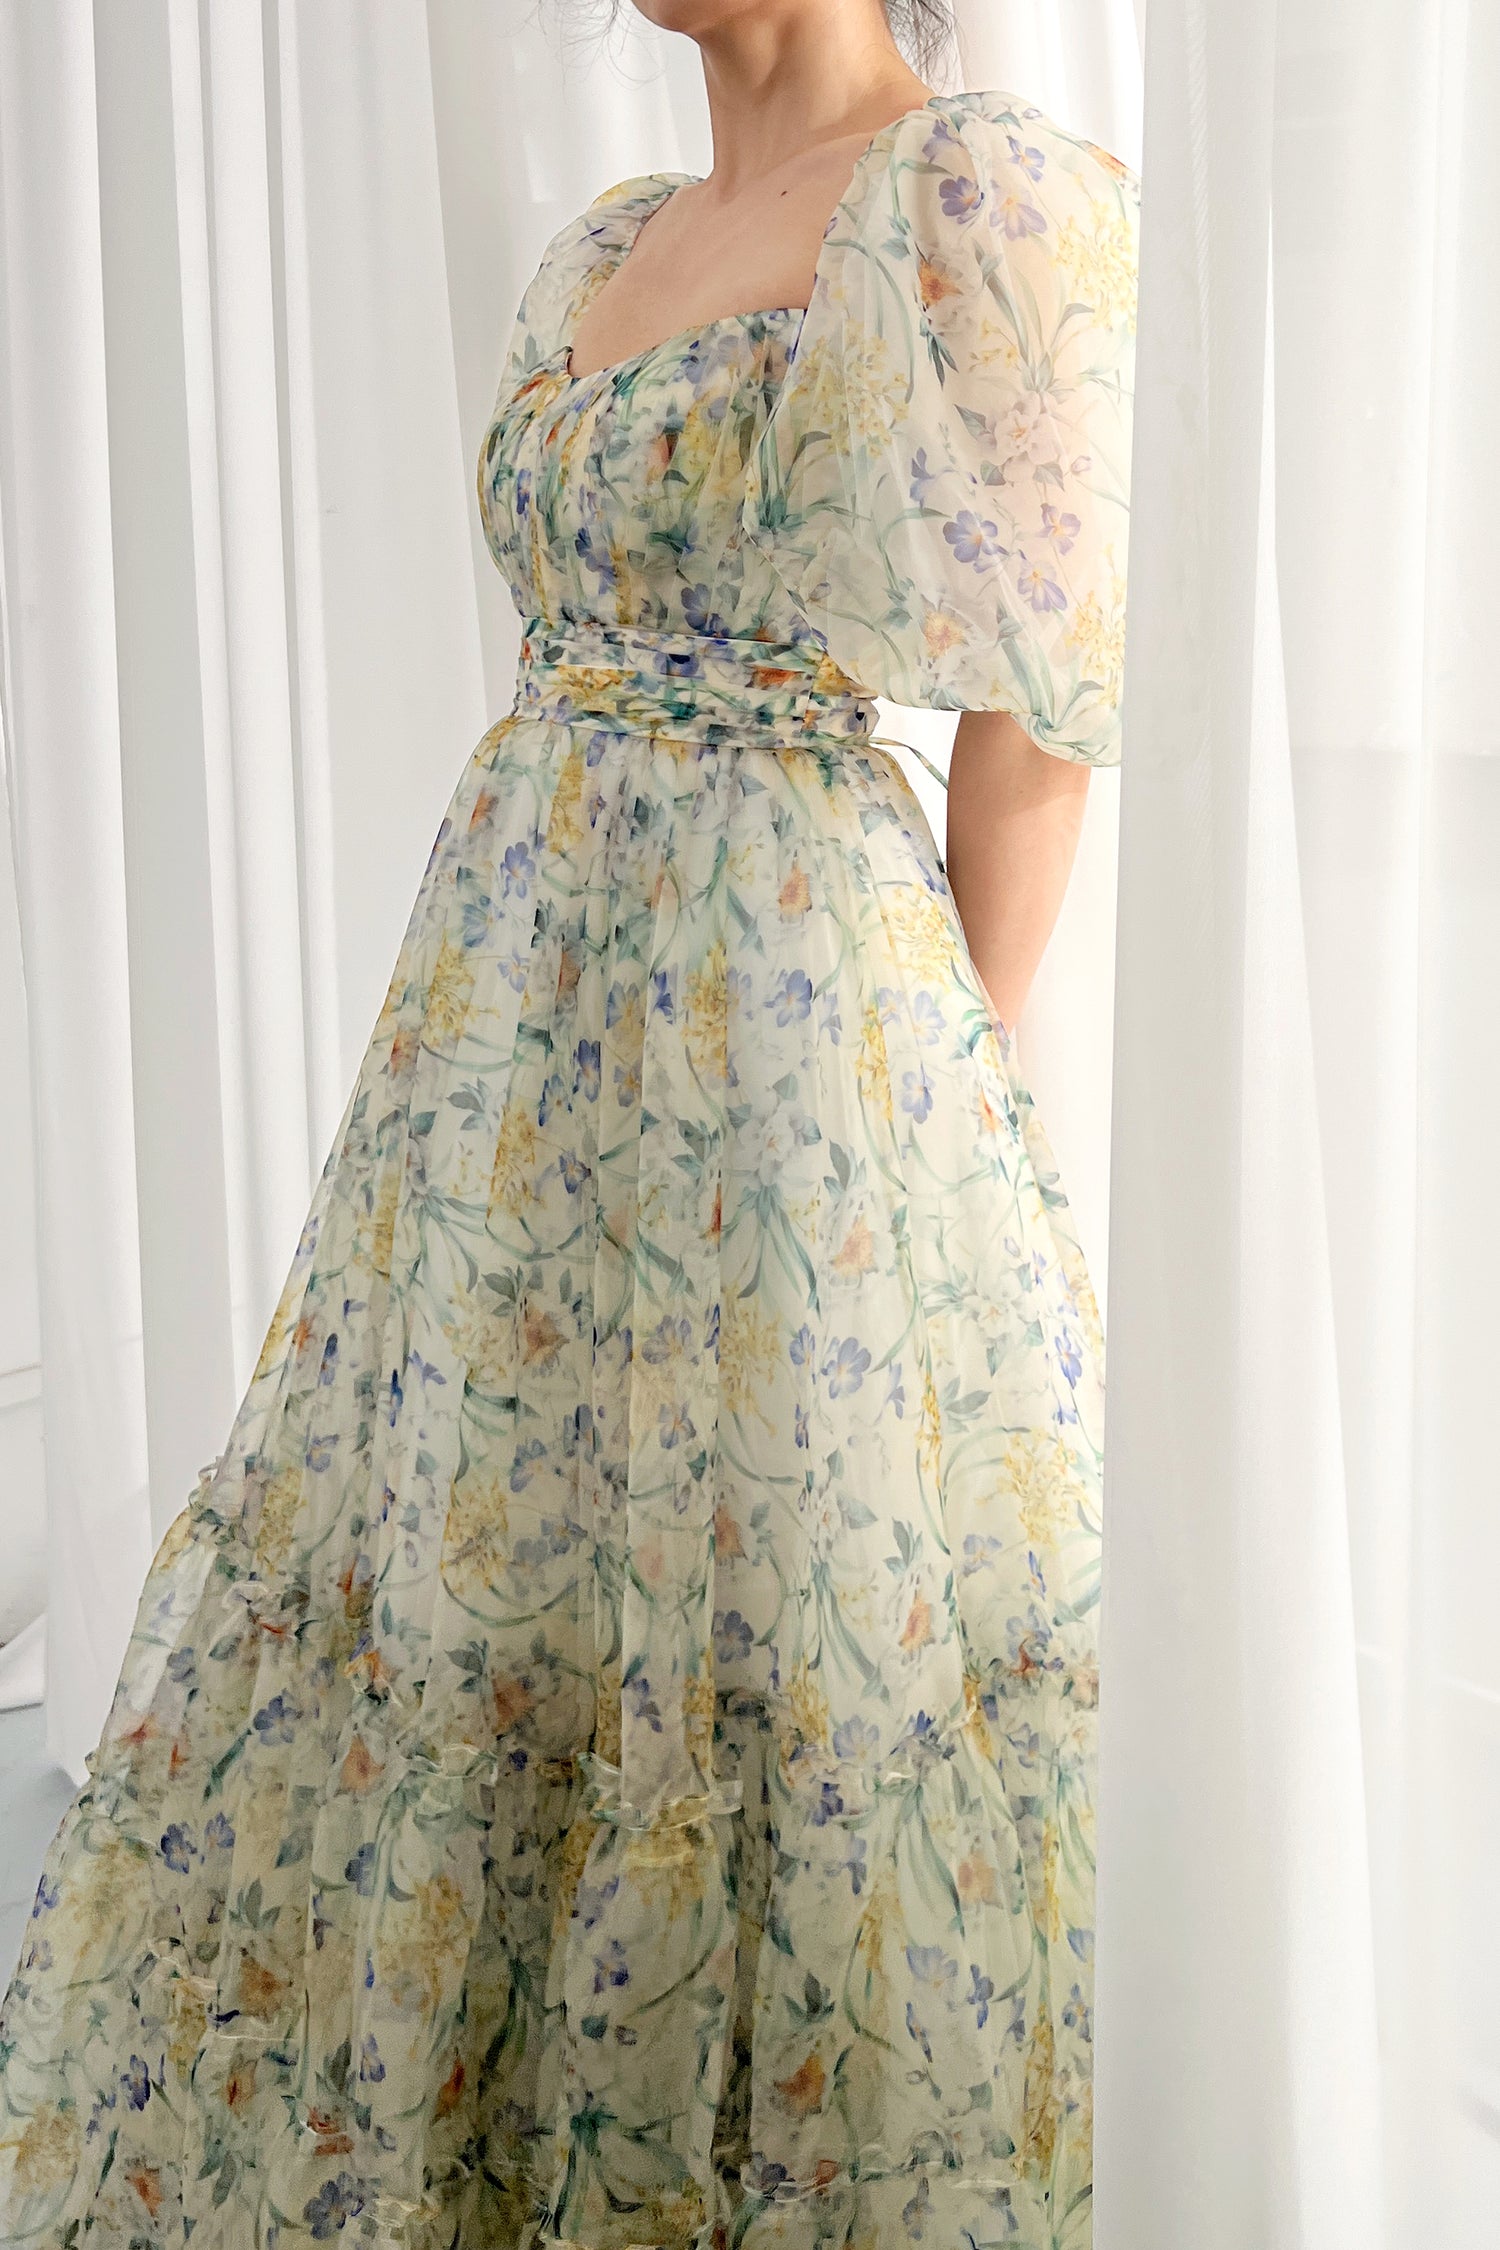 MissJophiel Puff Sleeves Tiered Floral Organza Prom Dress